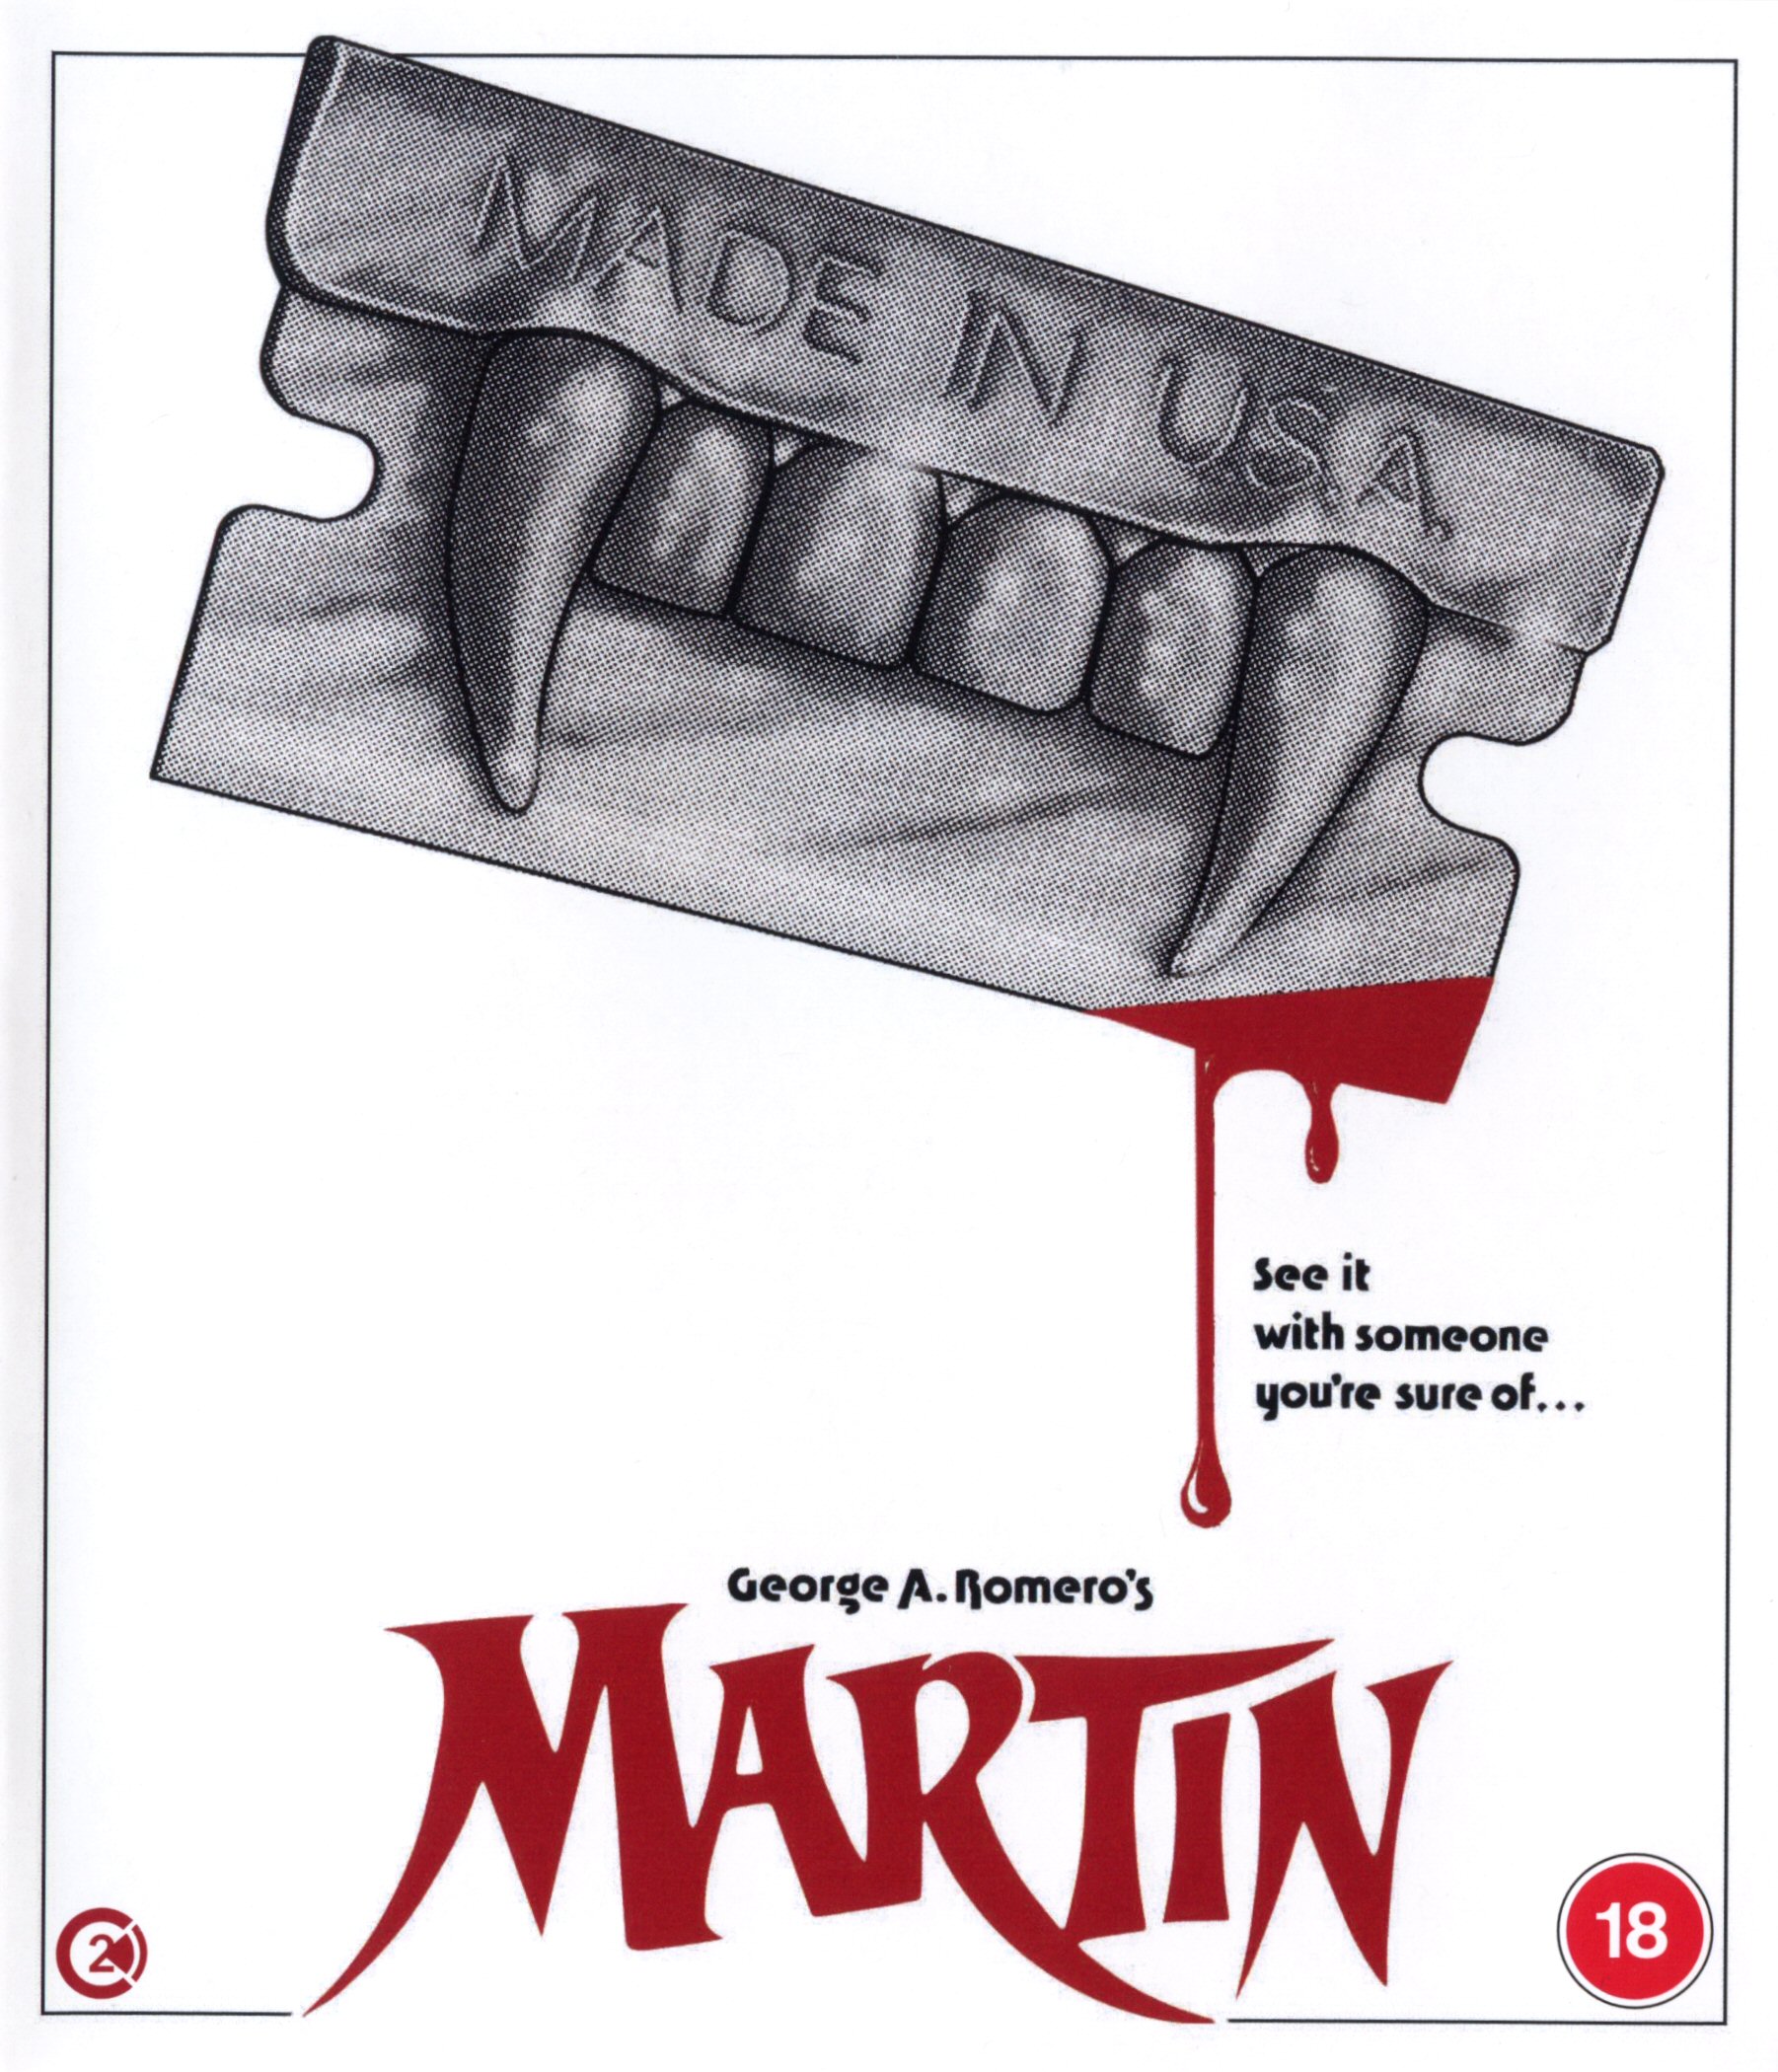 DVD Exotica A Polish Vampire In Braddock Martin image photo